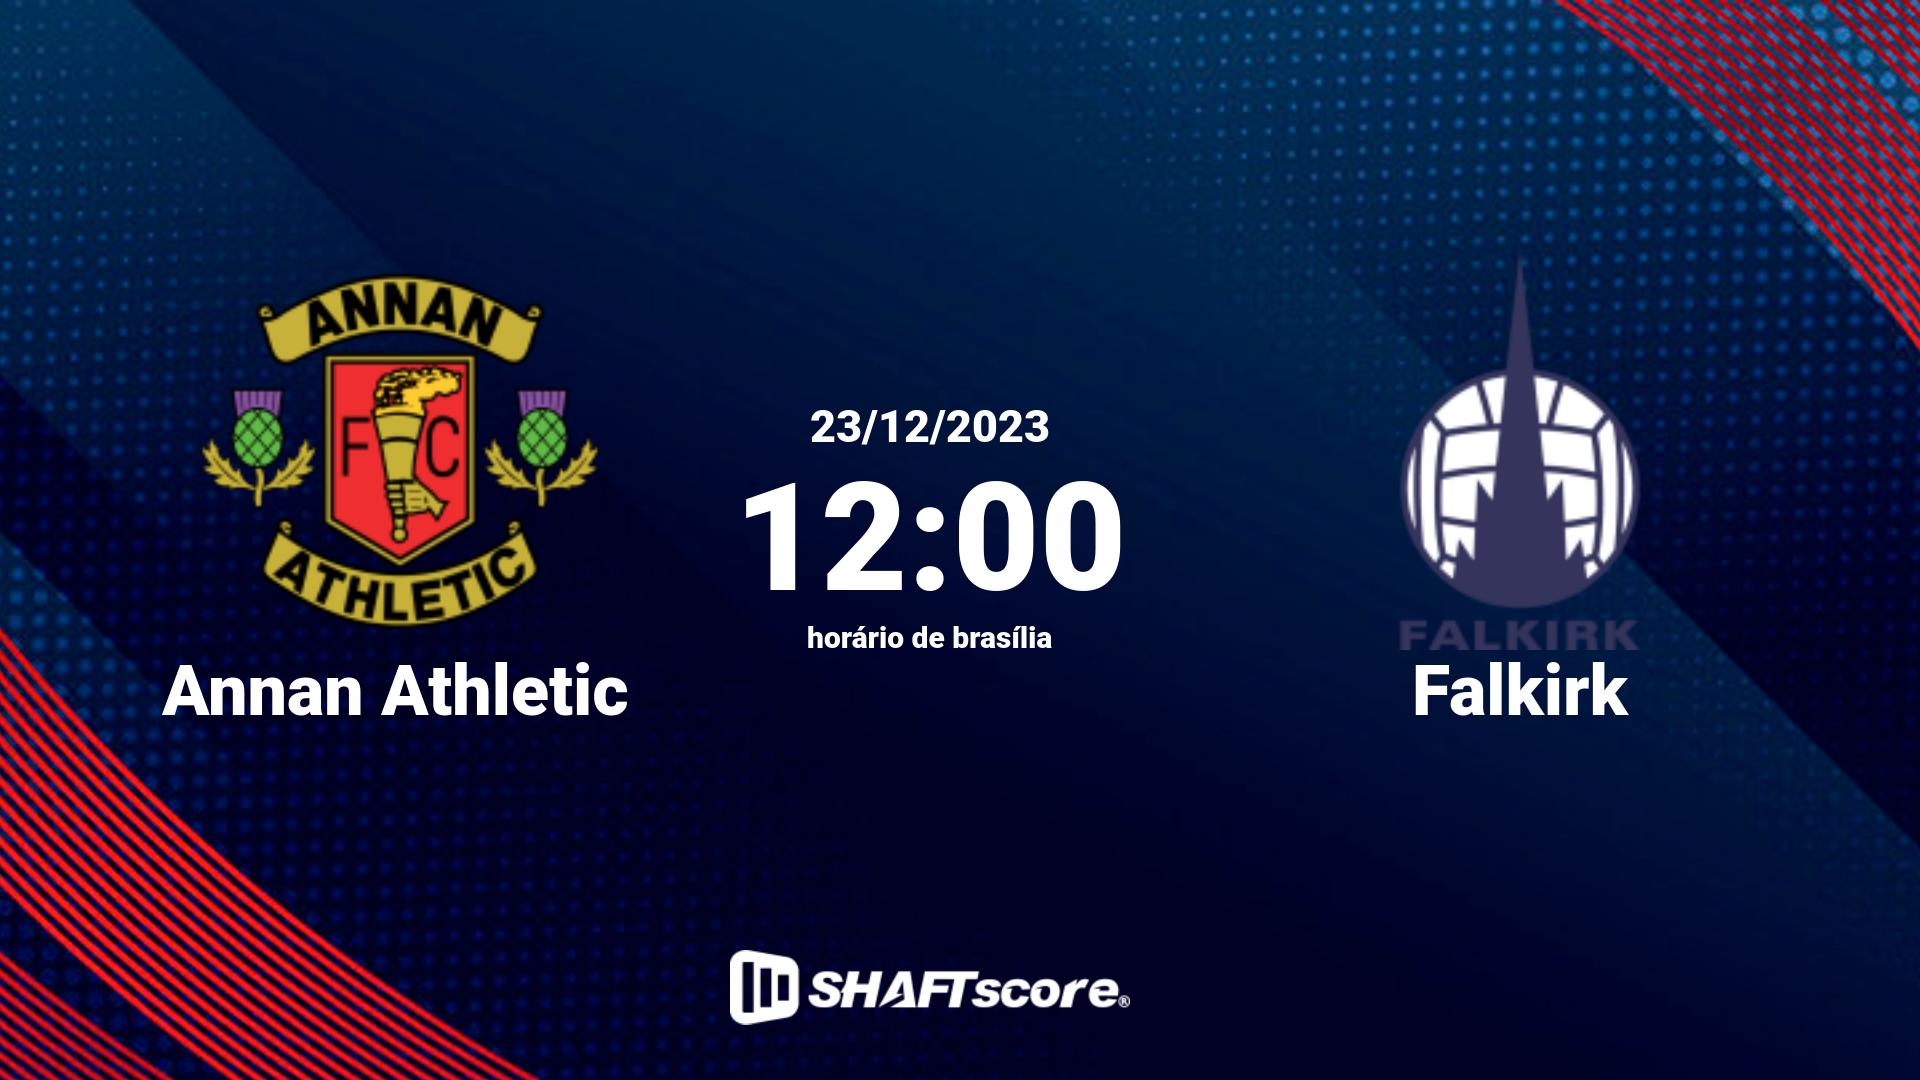 Estatísticas do jogo Annan Athletic vs Falkirk 23.12 12:00